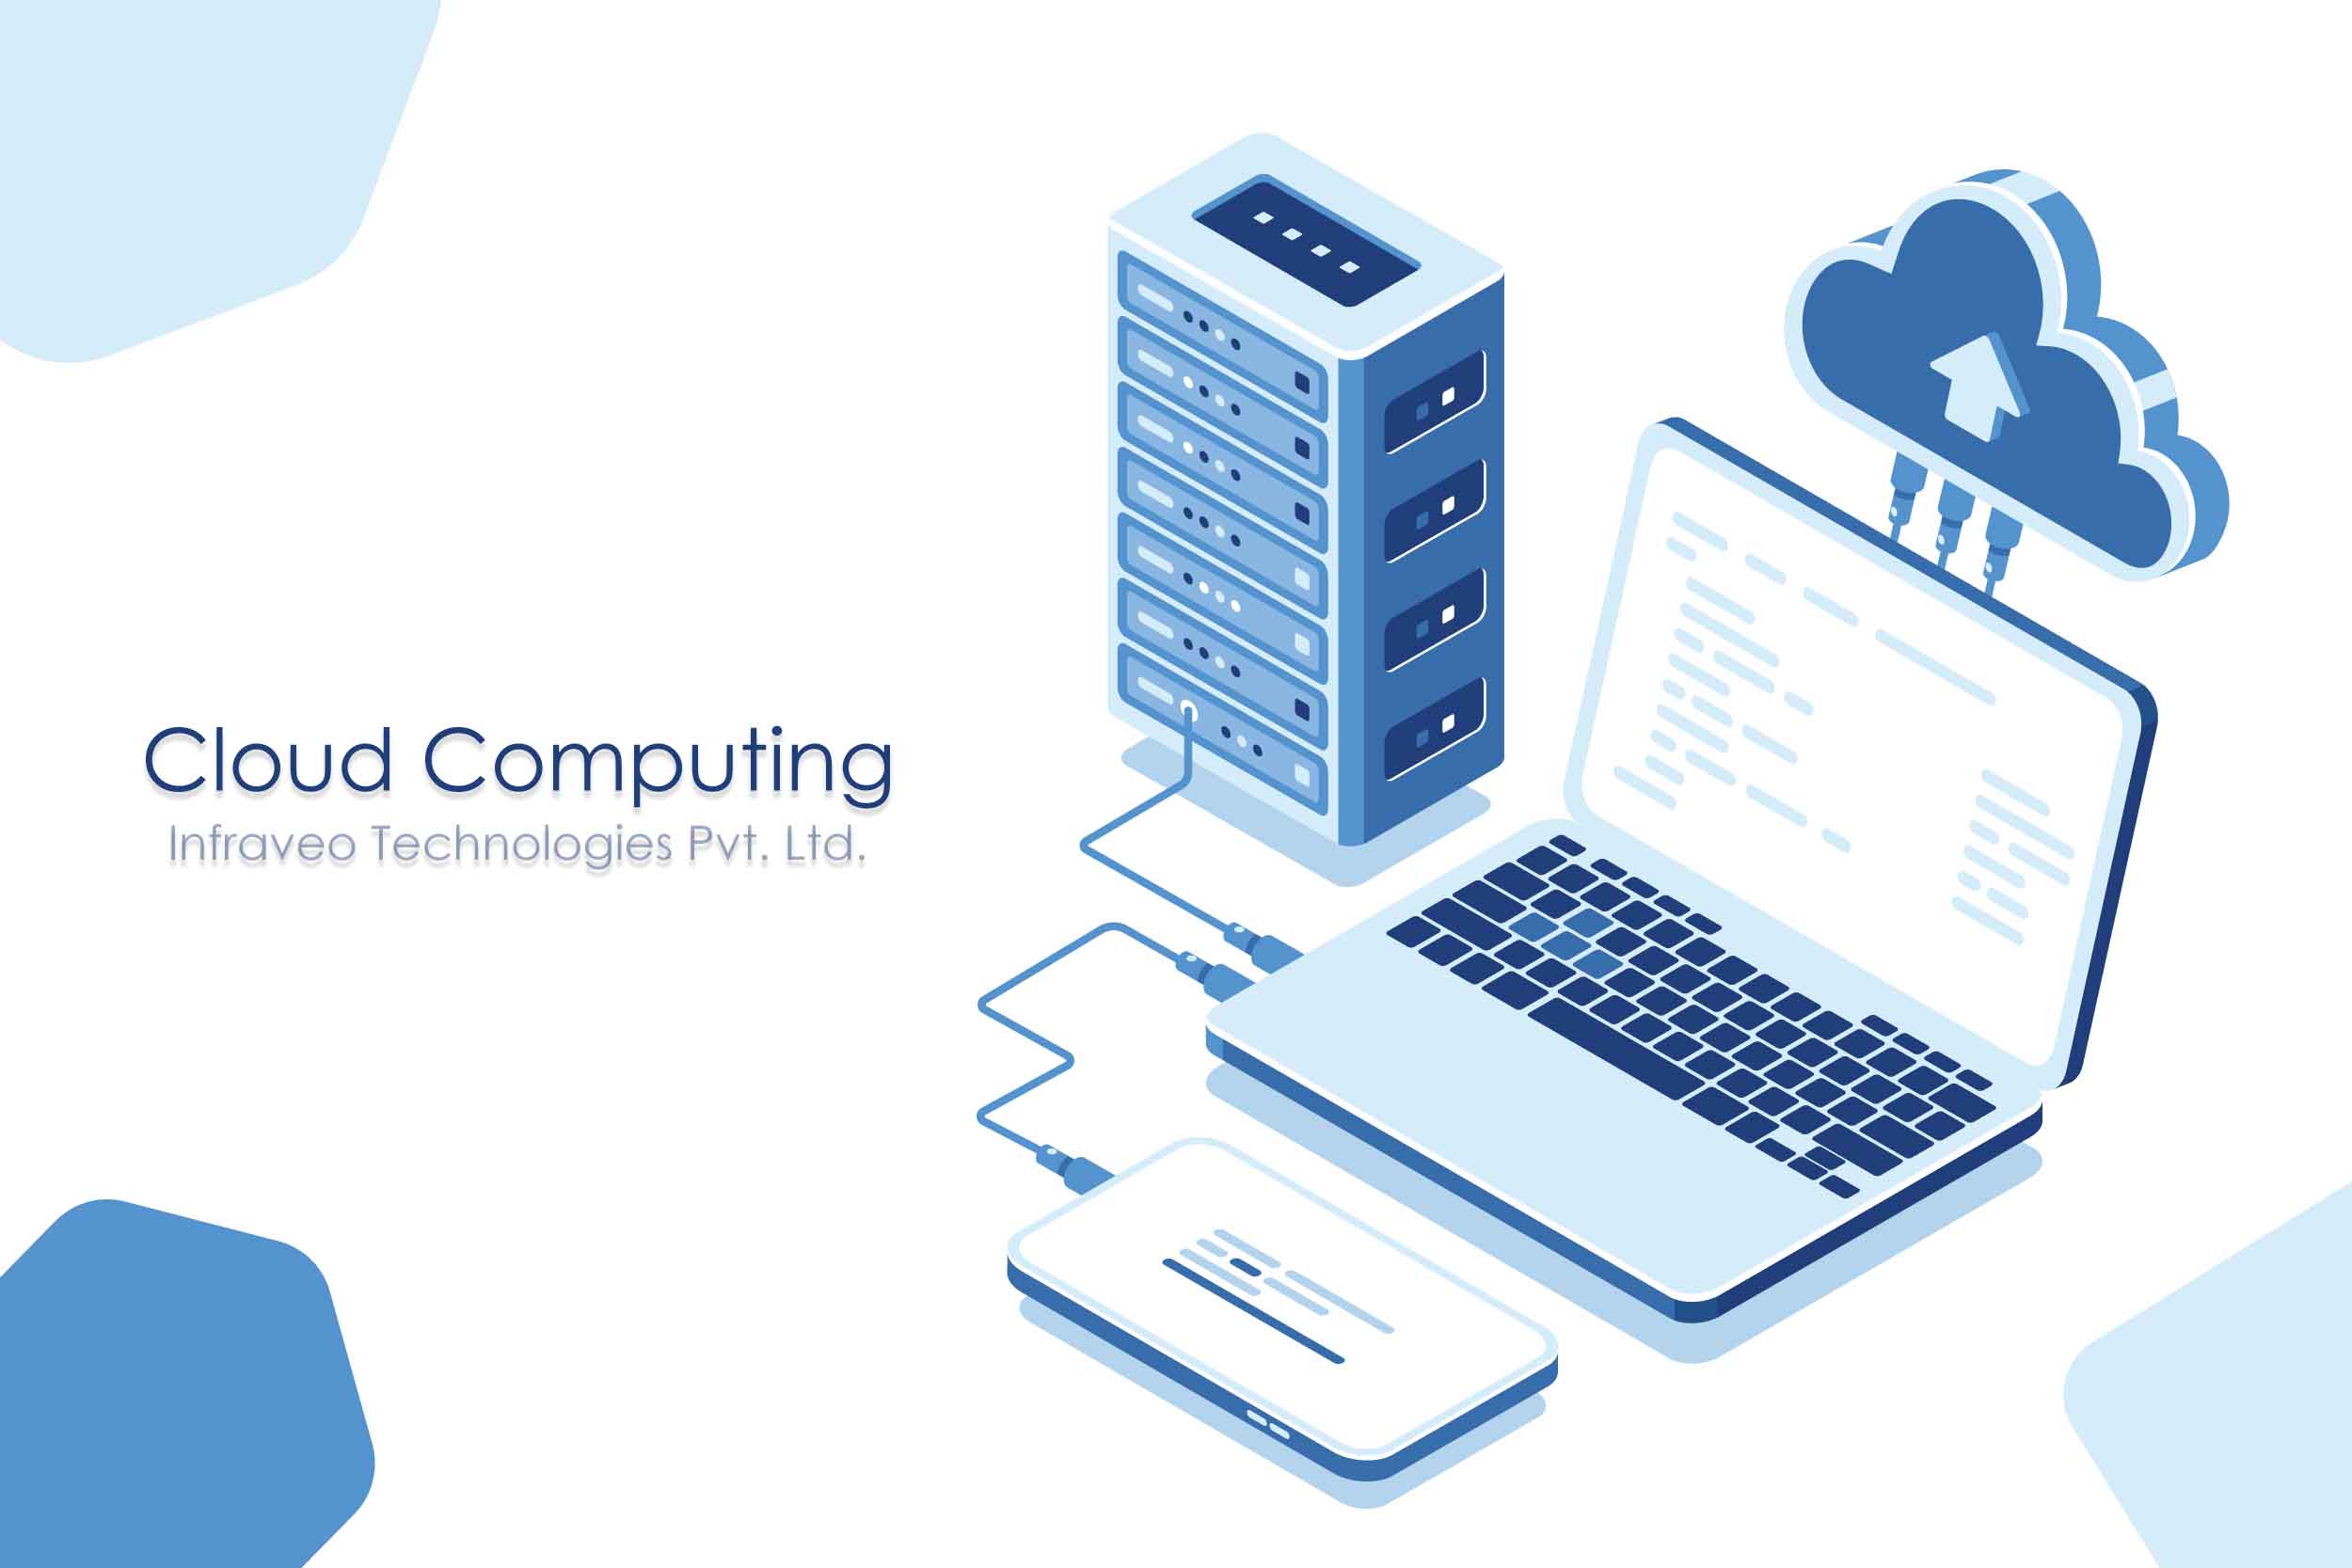 Infraveo Technologies - Cloud Computing Blog Poster